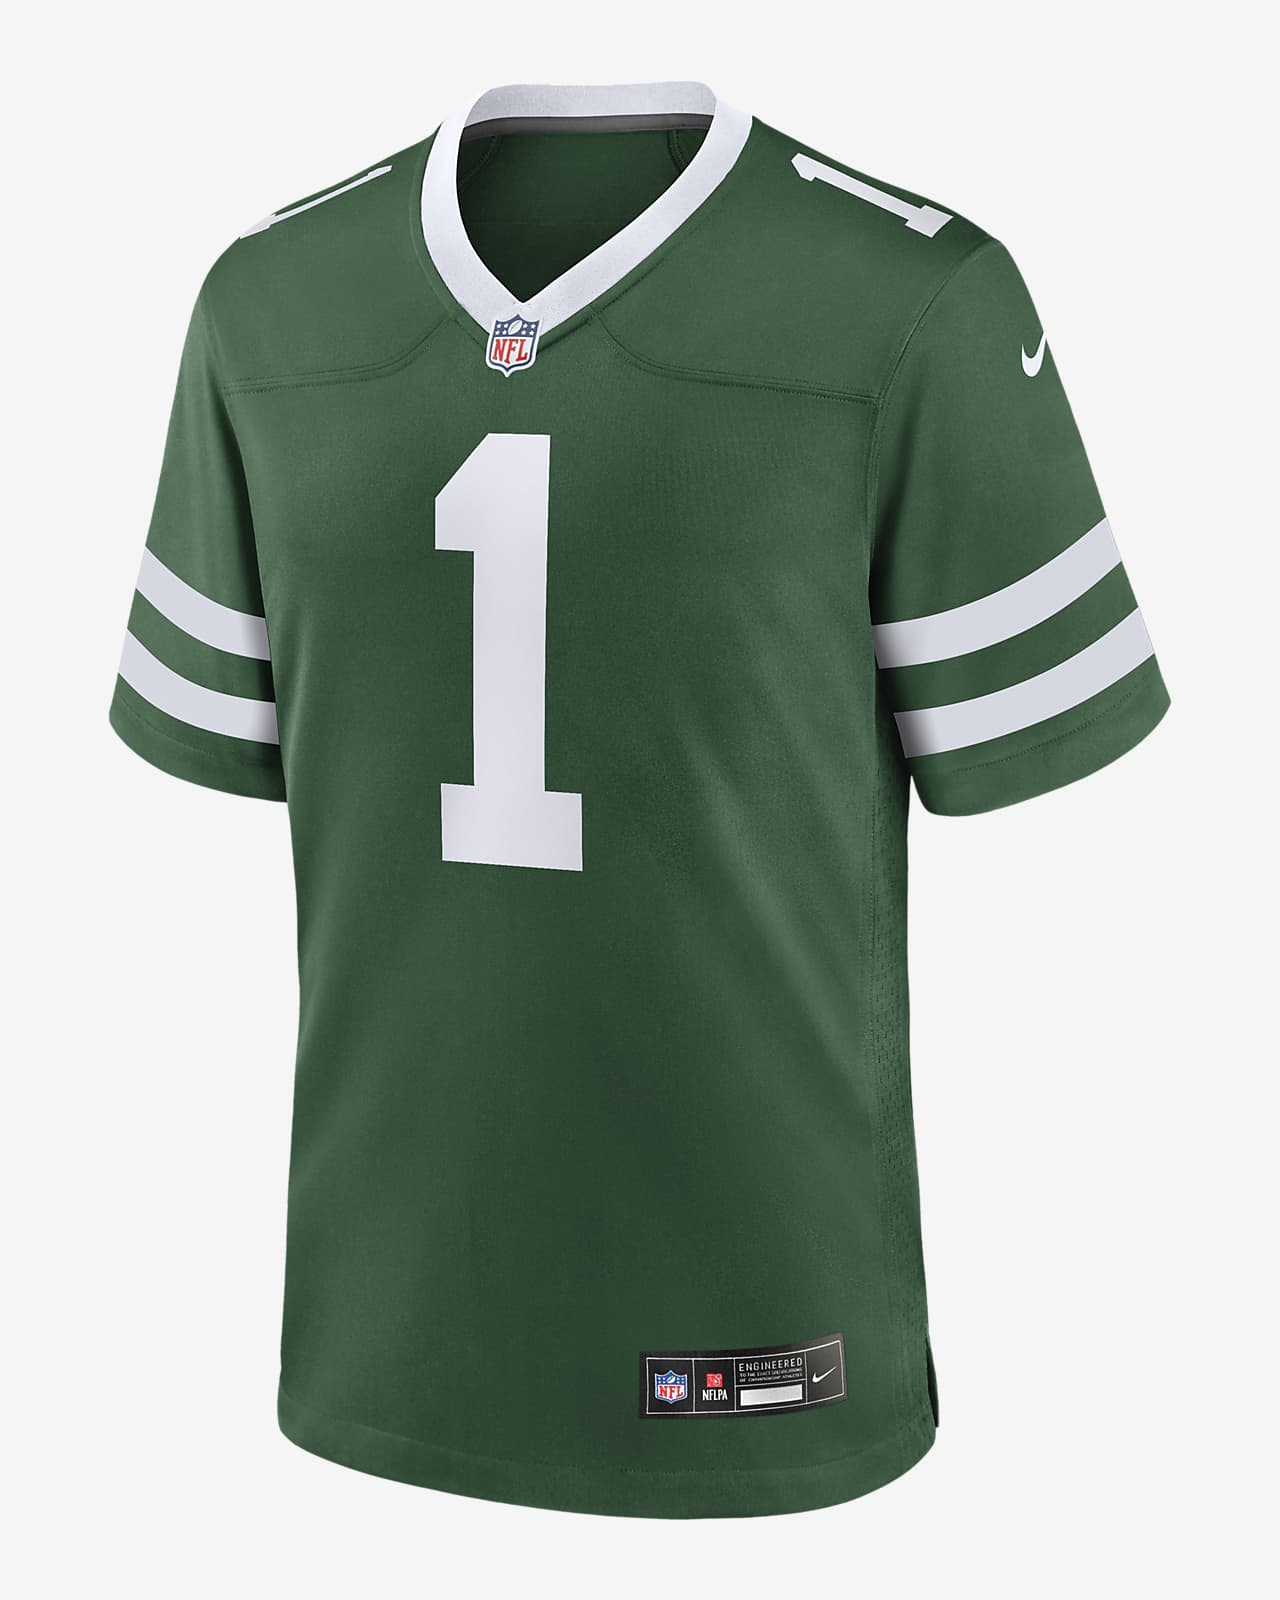 Sauce Gardner New York Jets Men's Nike NFL Game Football Jersey